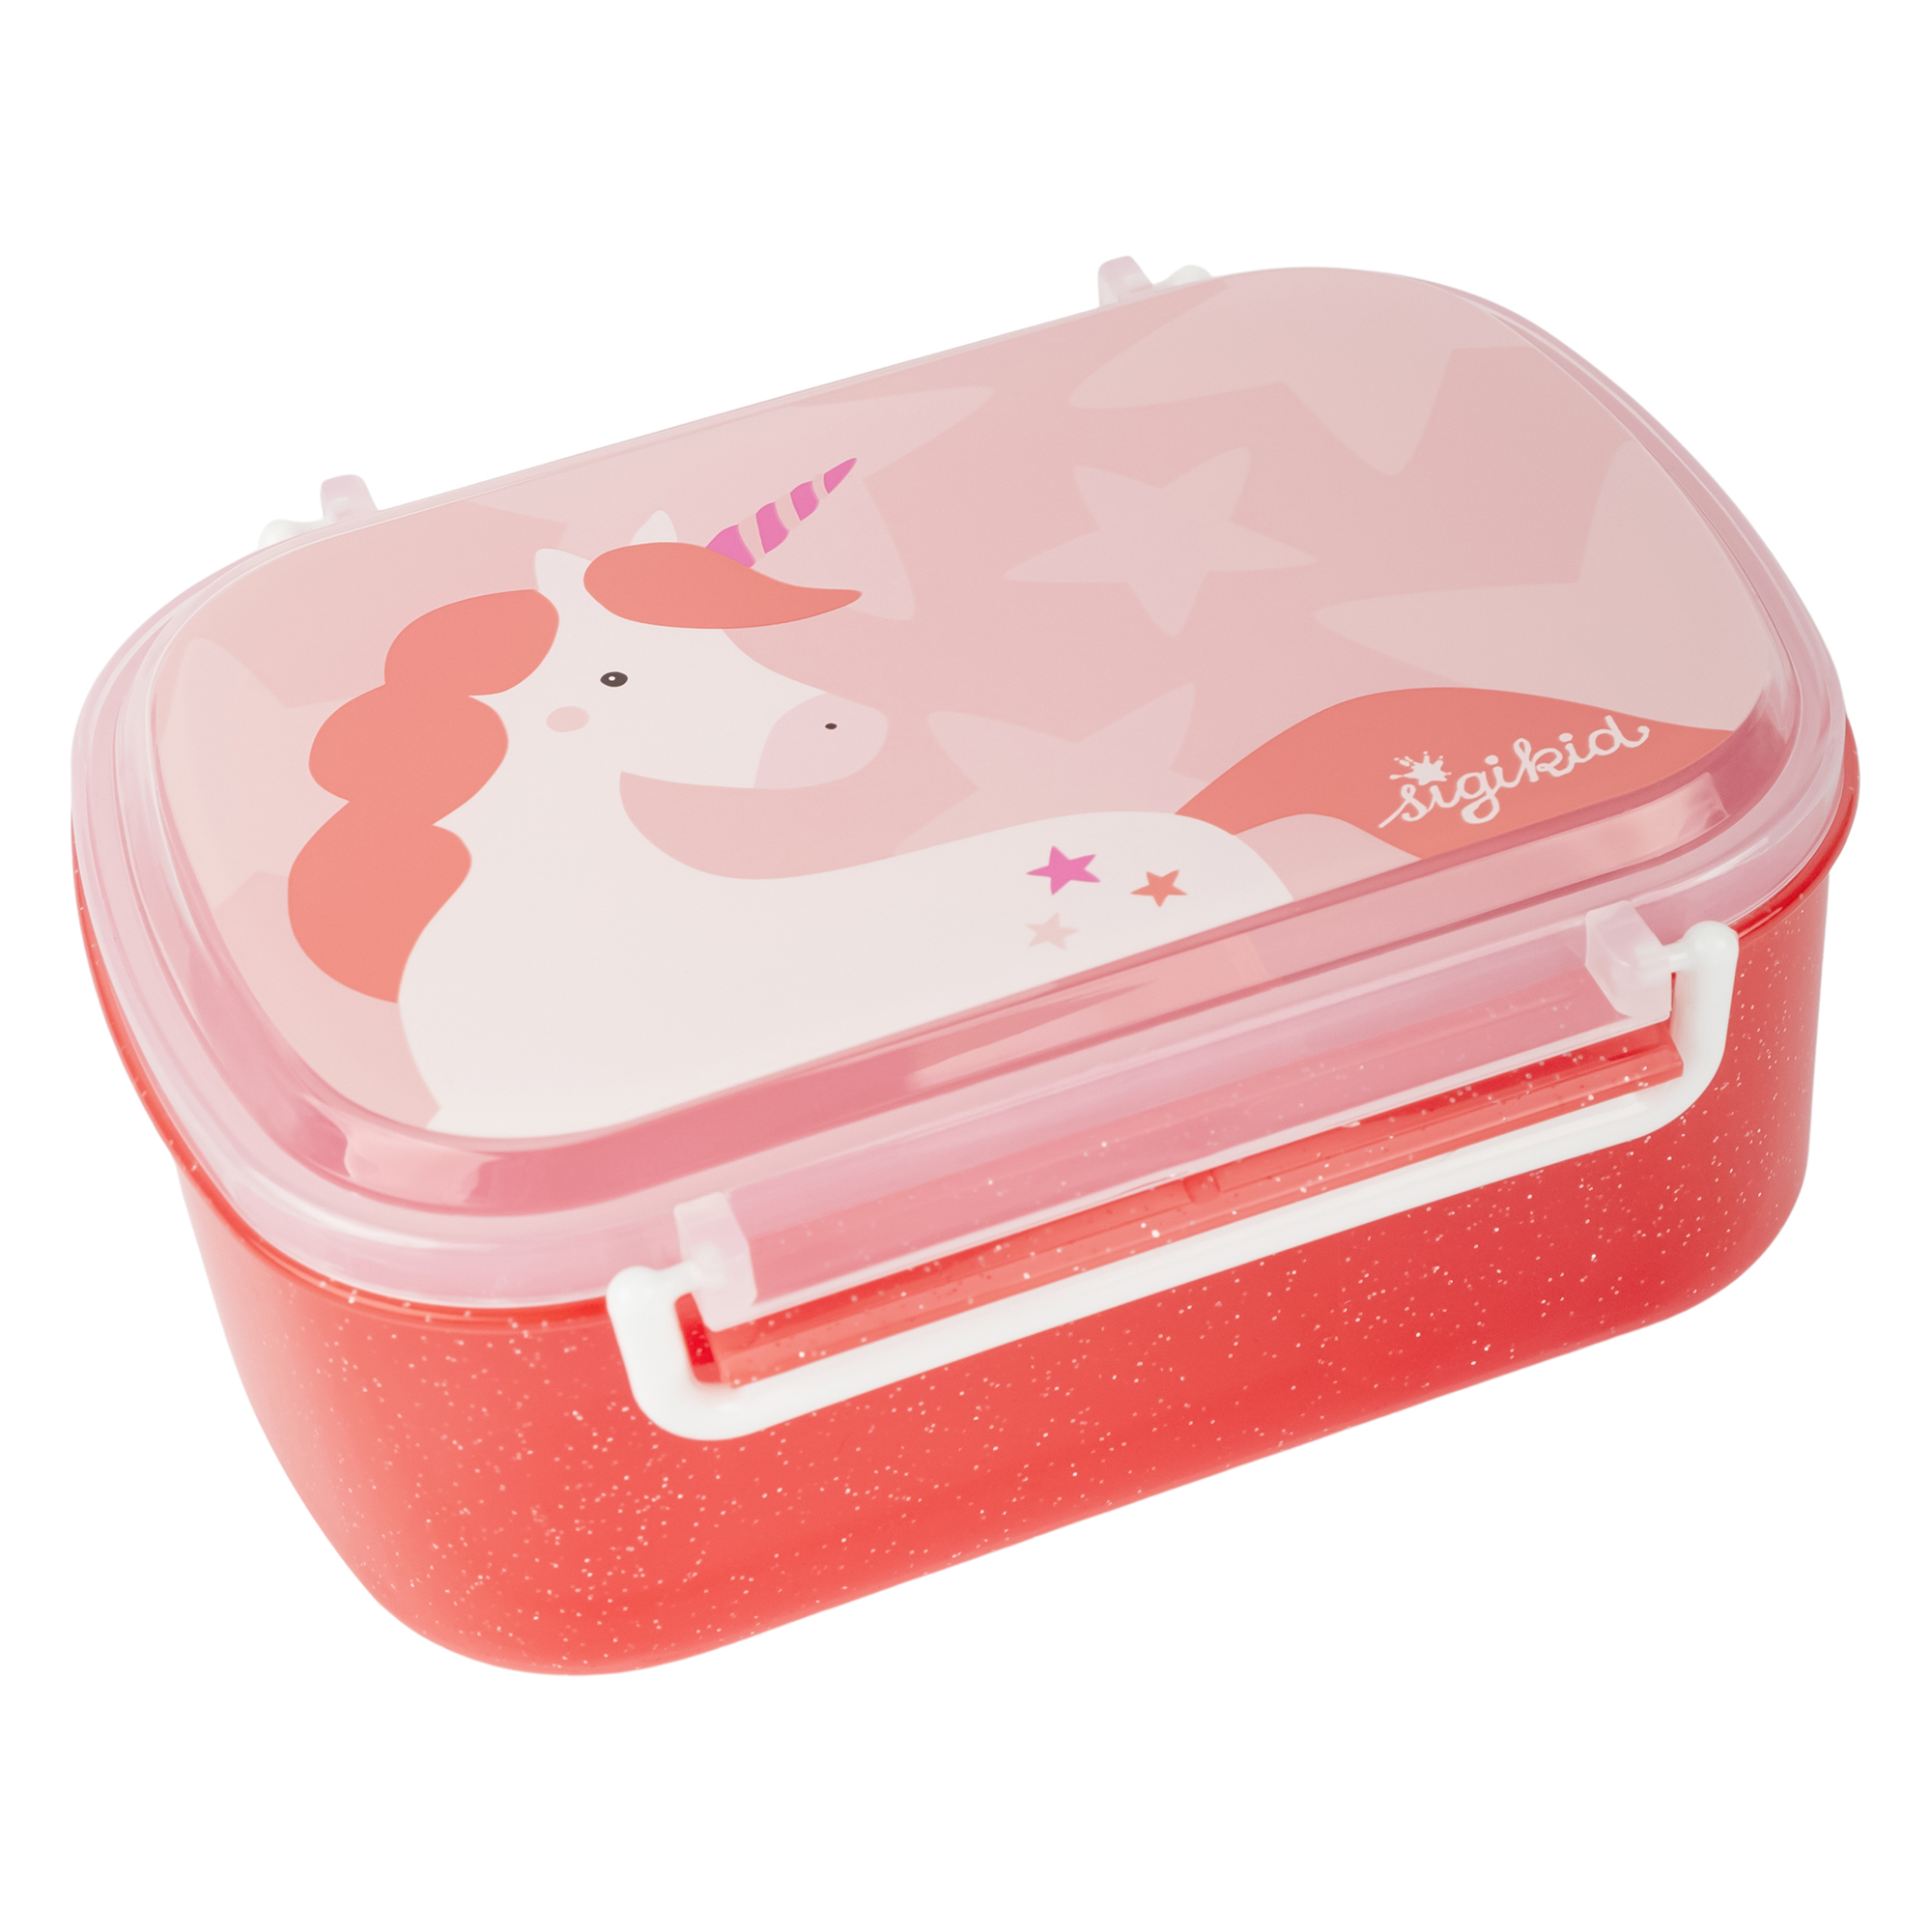 Lunchbox unicorn, separate veggie tray